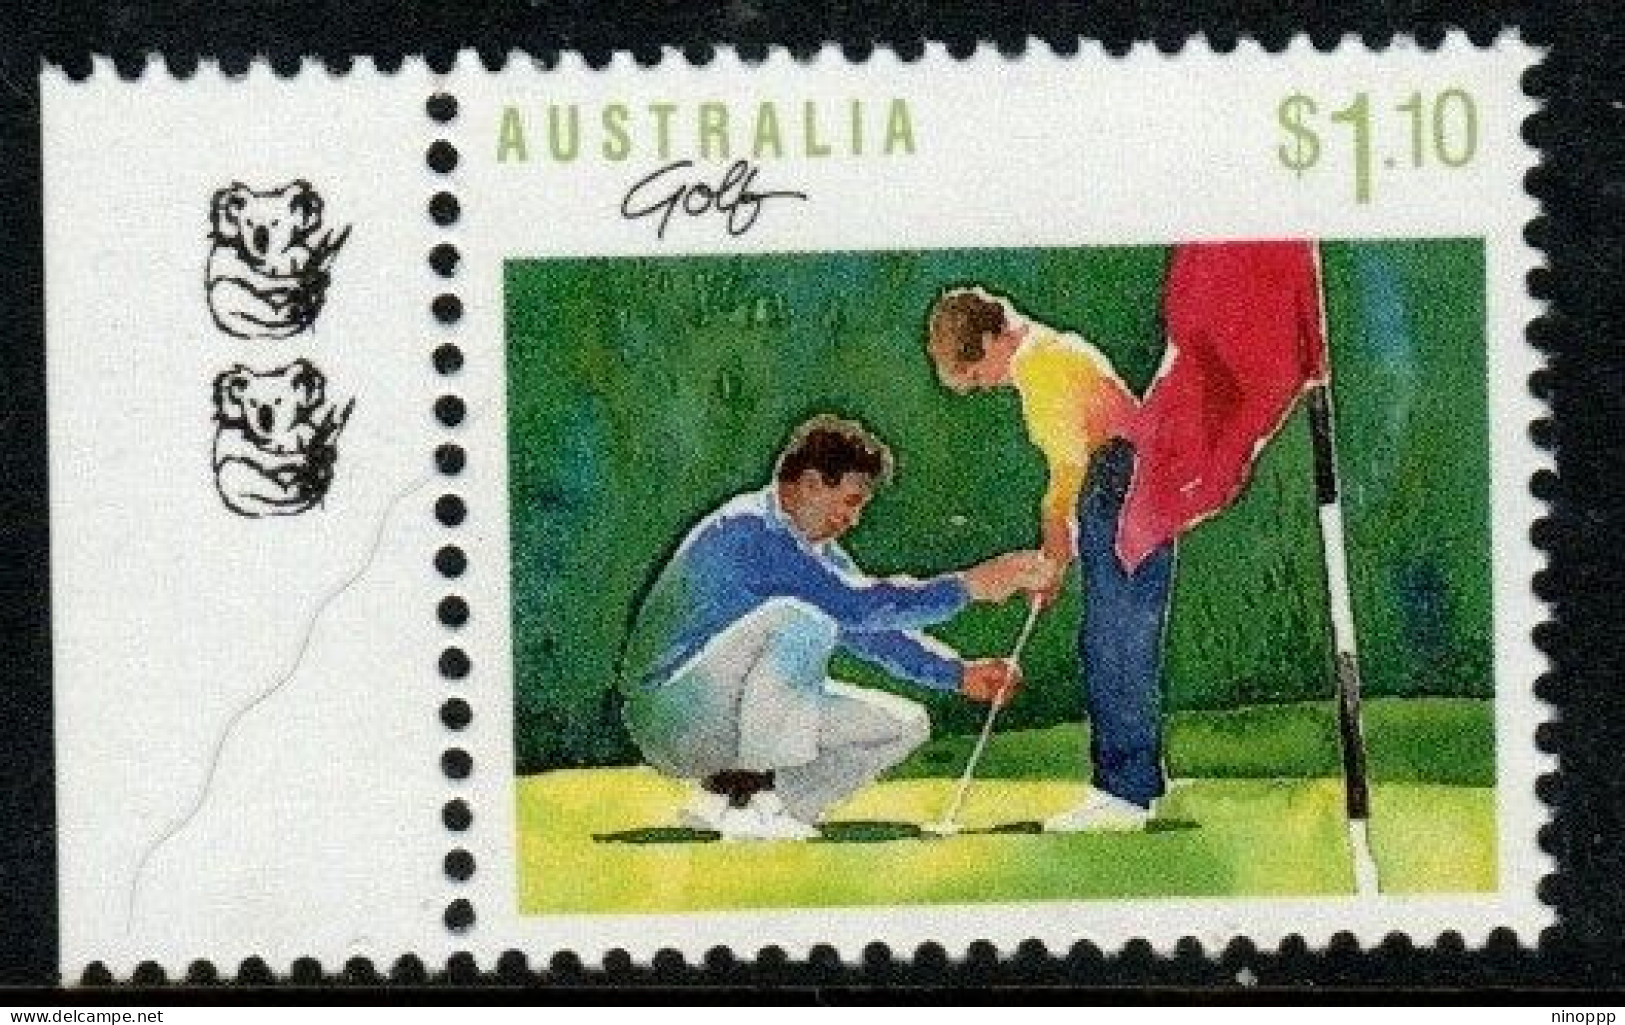 Australia Cat 1188a 1989 Sports $ 1.10 Golf, 2 Koalas Reprint,mint Never Hinged - Proeven & Herdruk